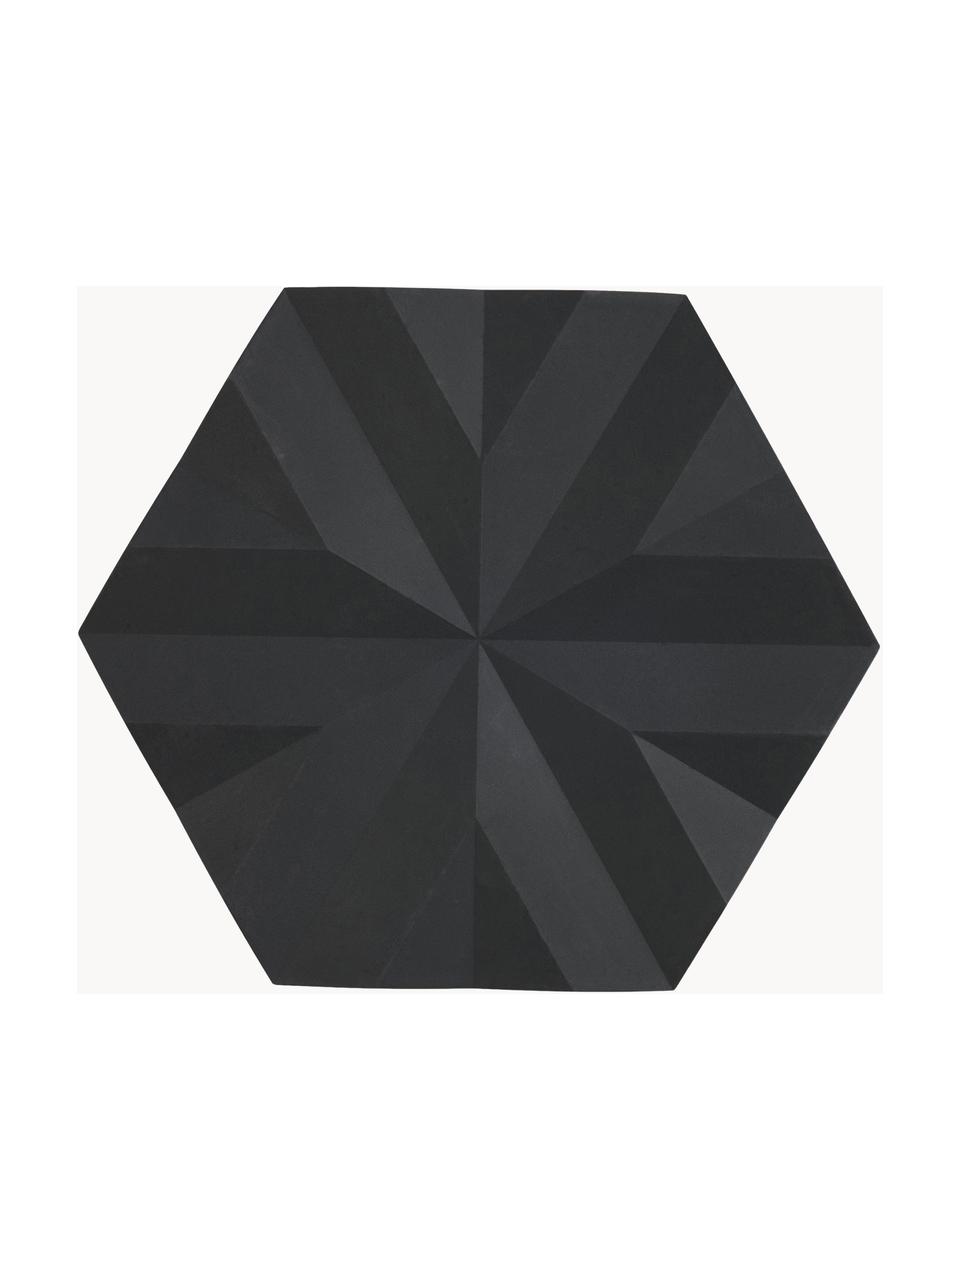 Panonderzetter Ori, 2 stuks, Siliconen, Zwart, L 16 x B 14 cm